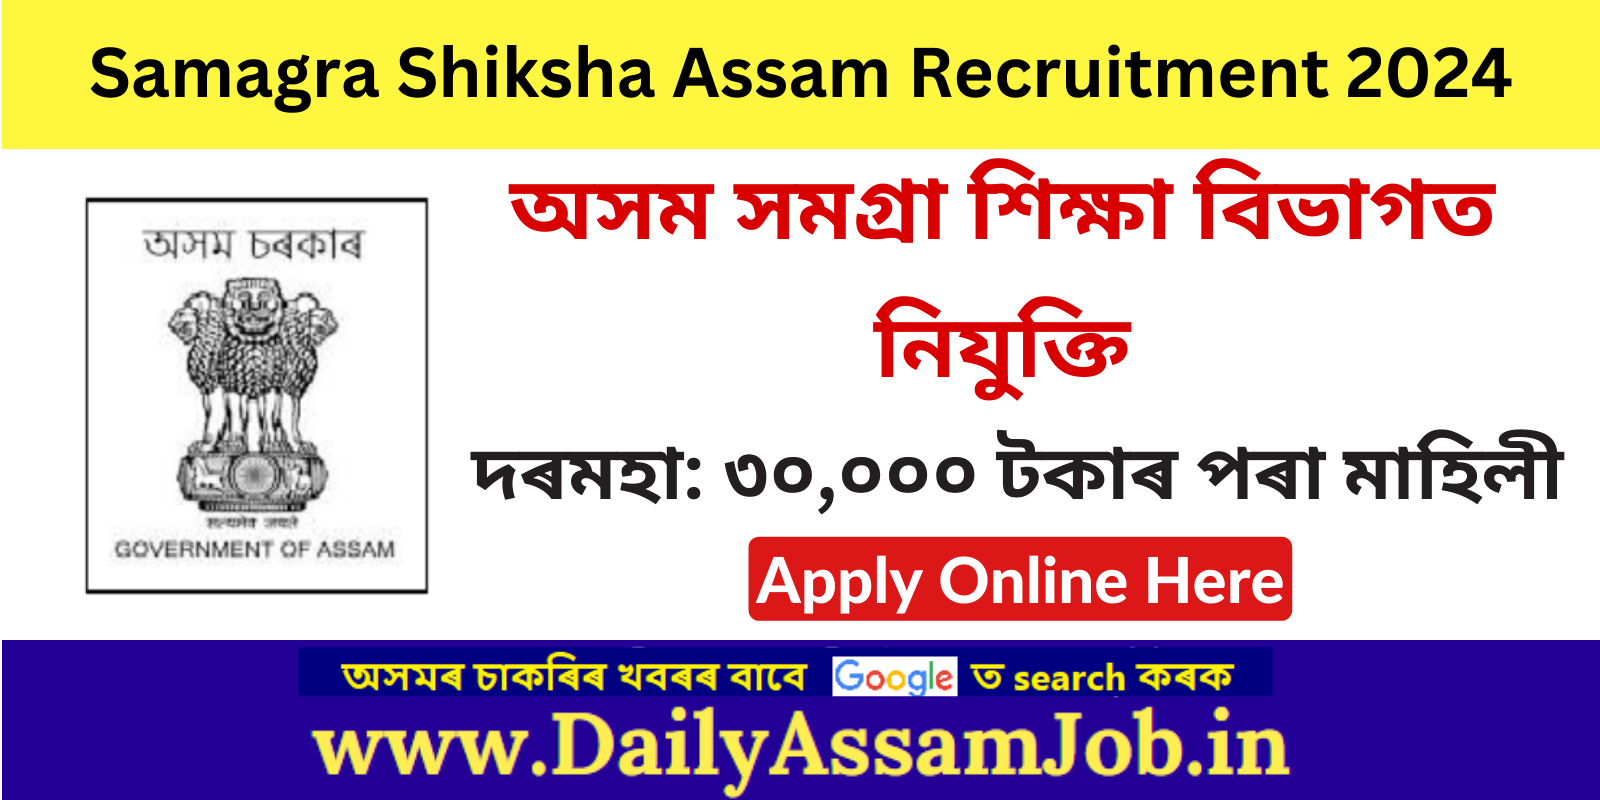 Samagra Shiksha Assam Recruitment 2024 - 02 Project Engineer Posts